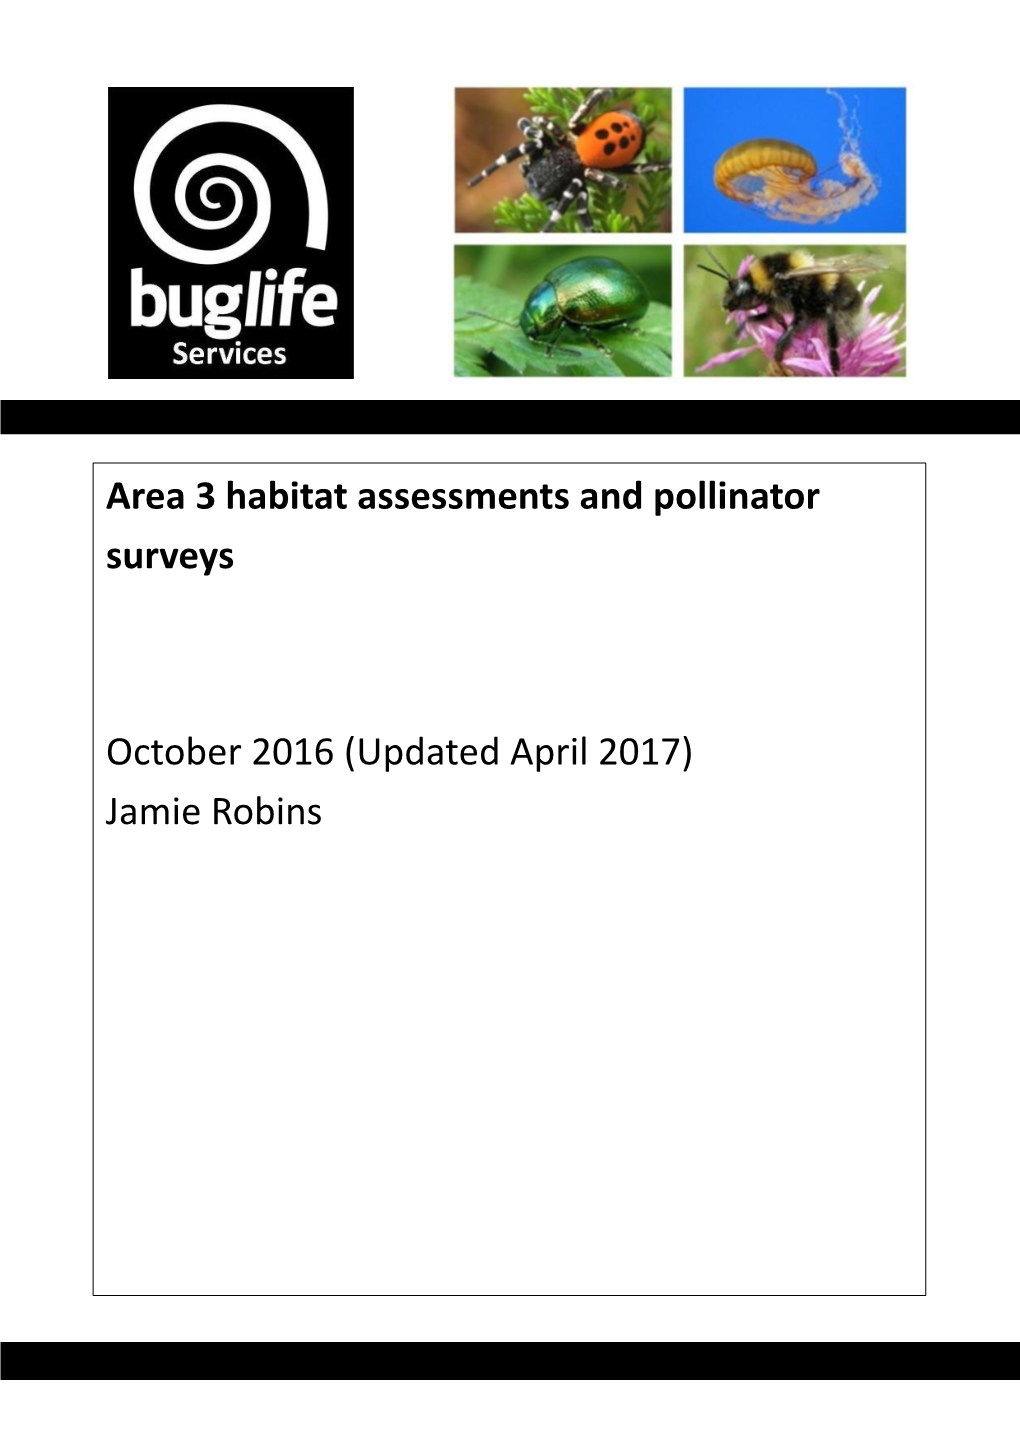 Area 3 Habitat Assessments and Pollinator Surveys October